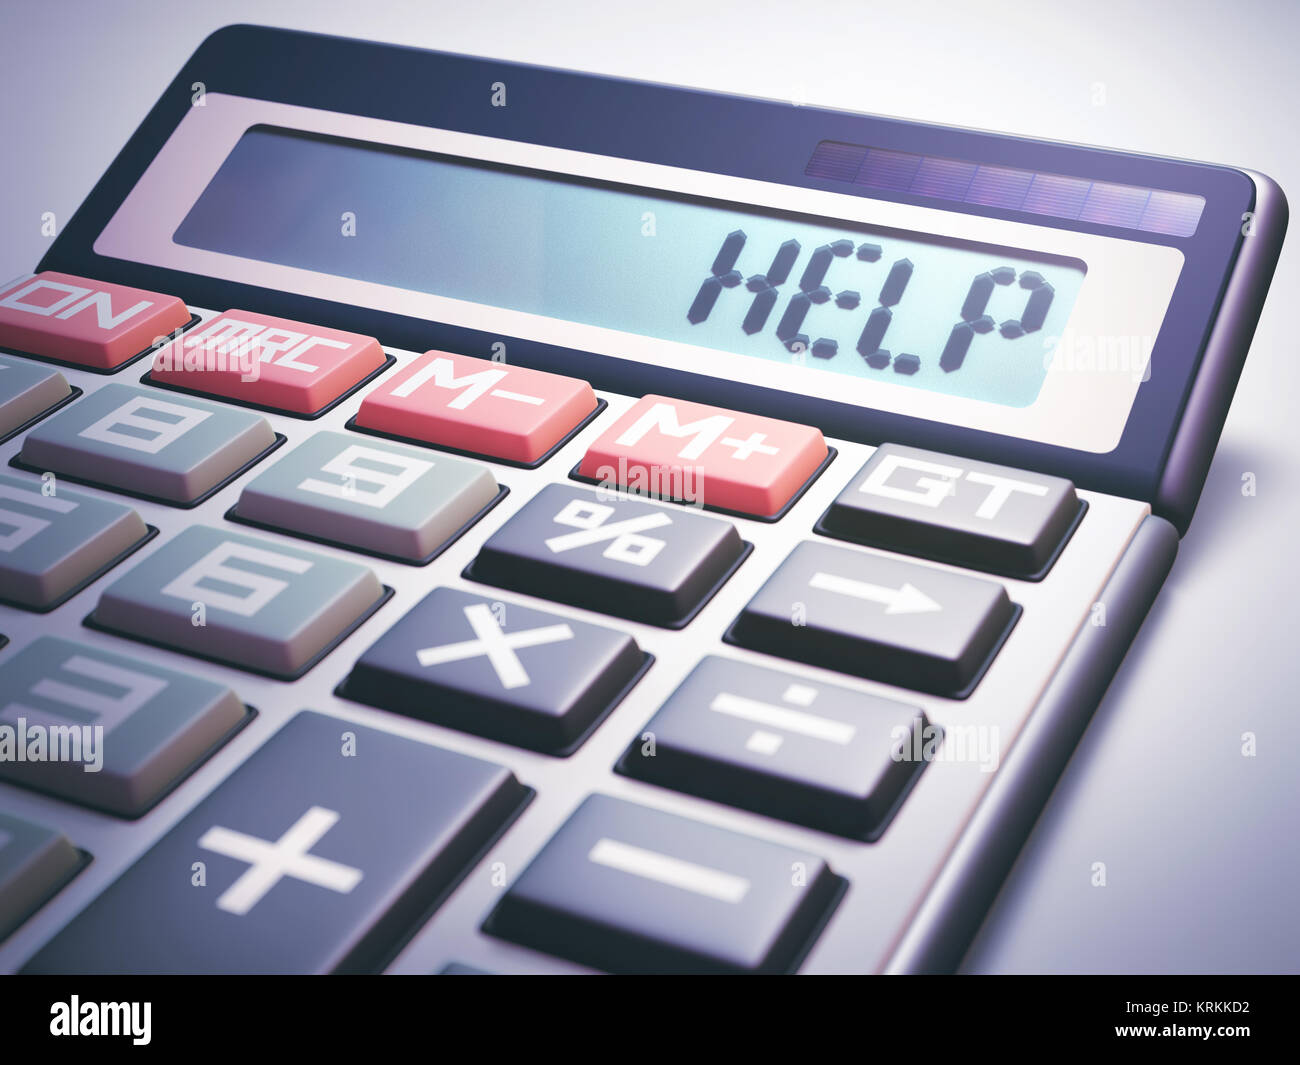 Help Calculation Business Finance Stock Photo